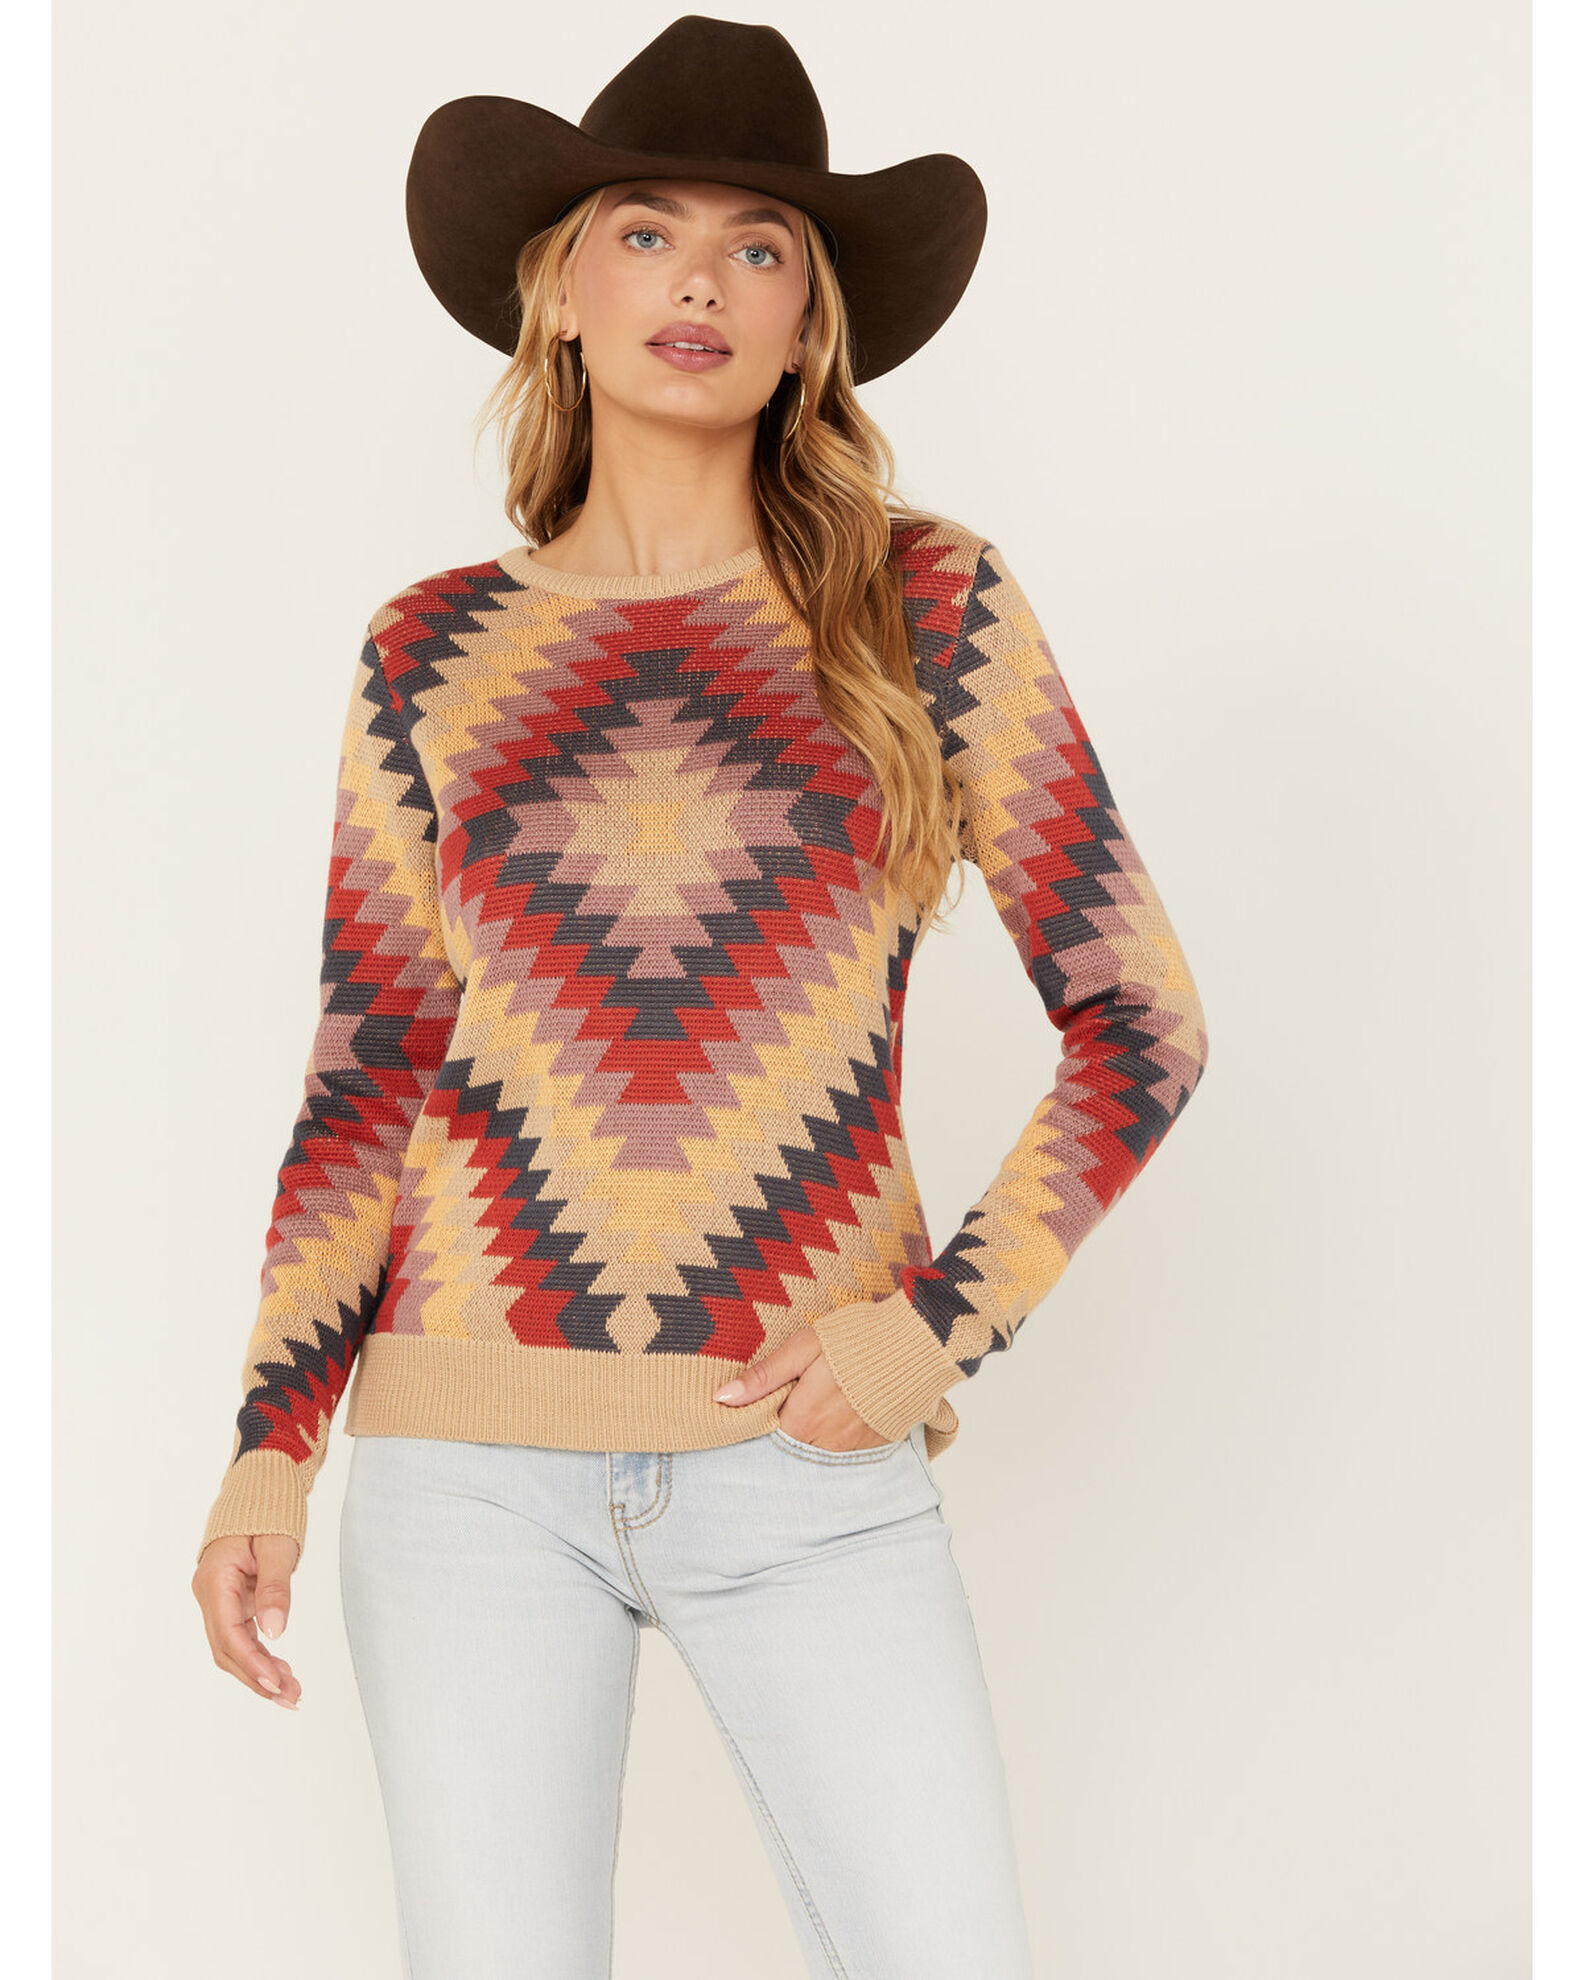 Cotton & Rye Women's Border Star Print Sweater